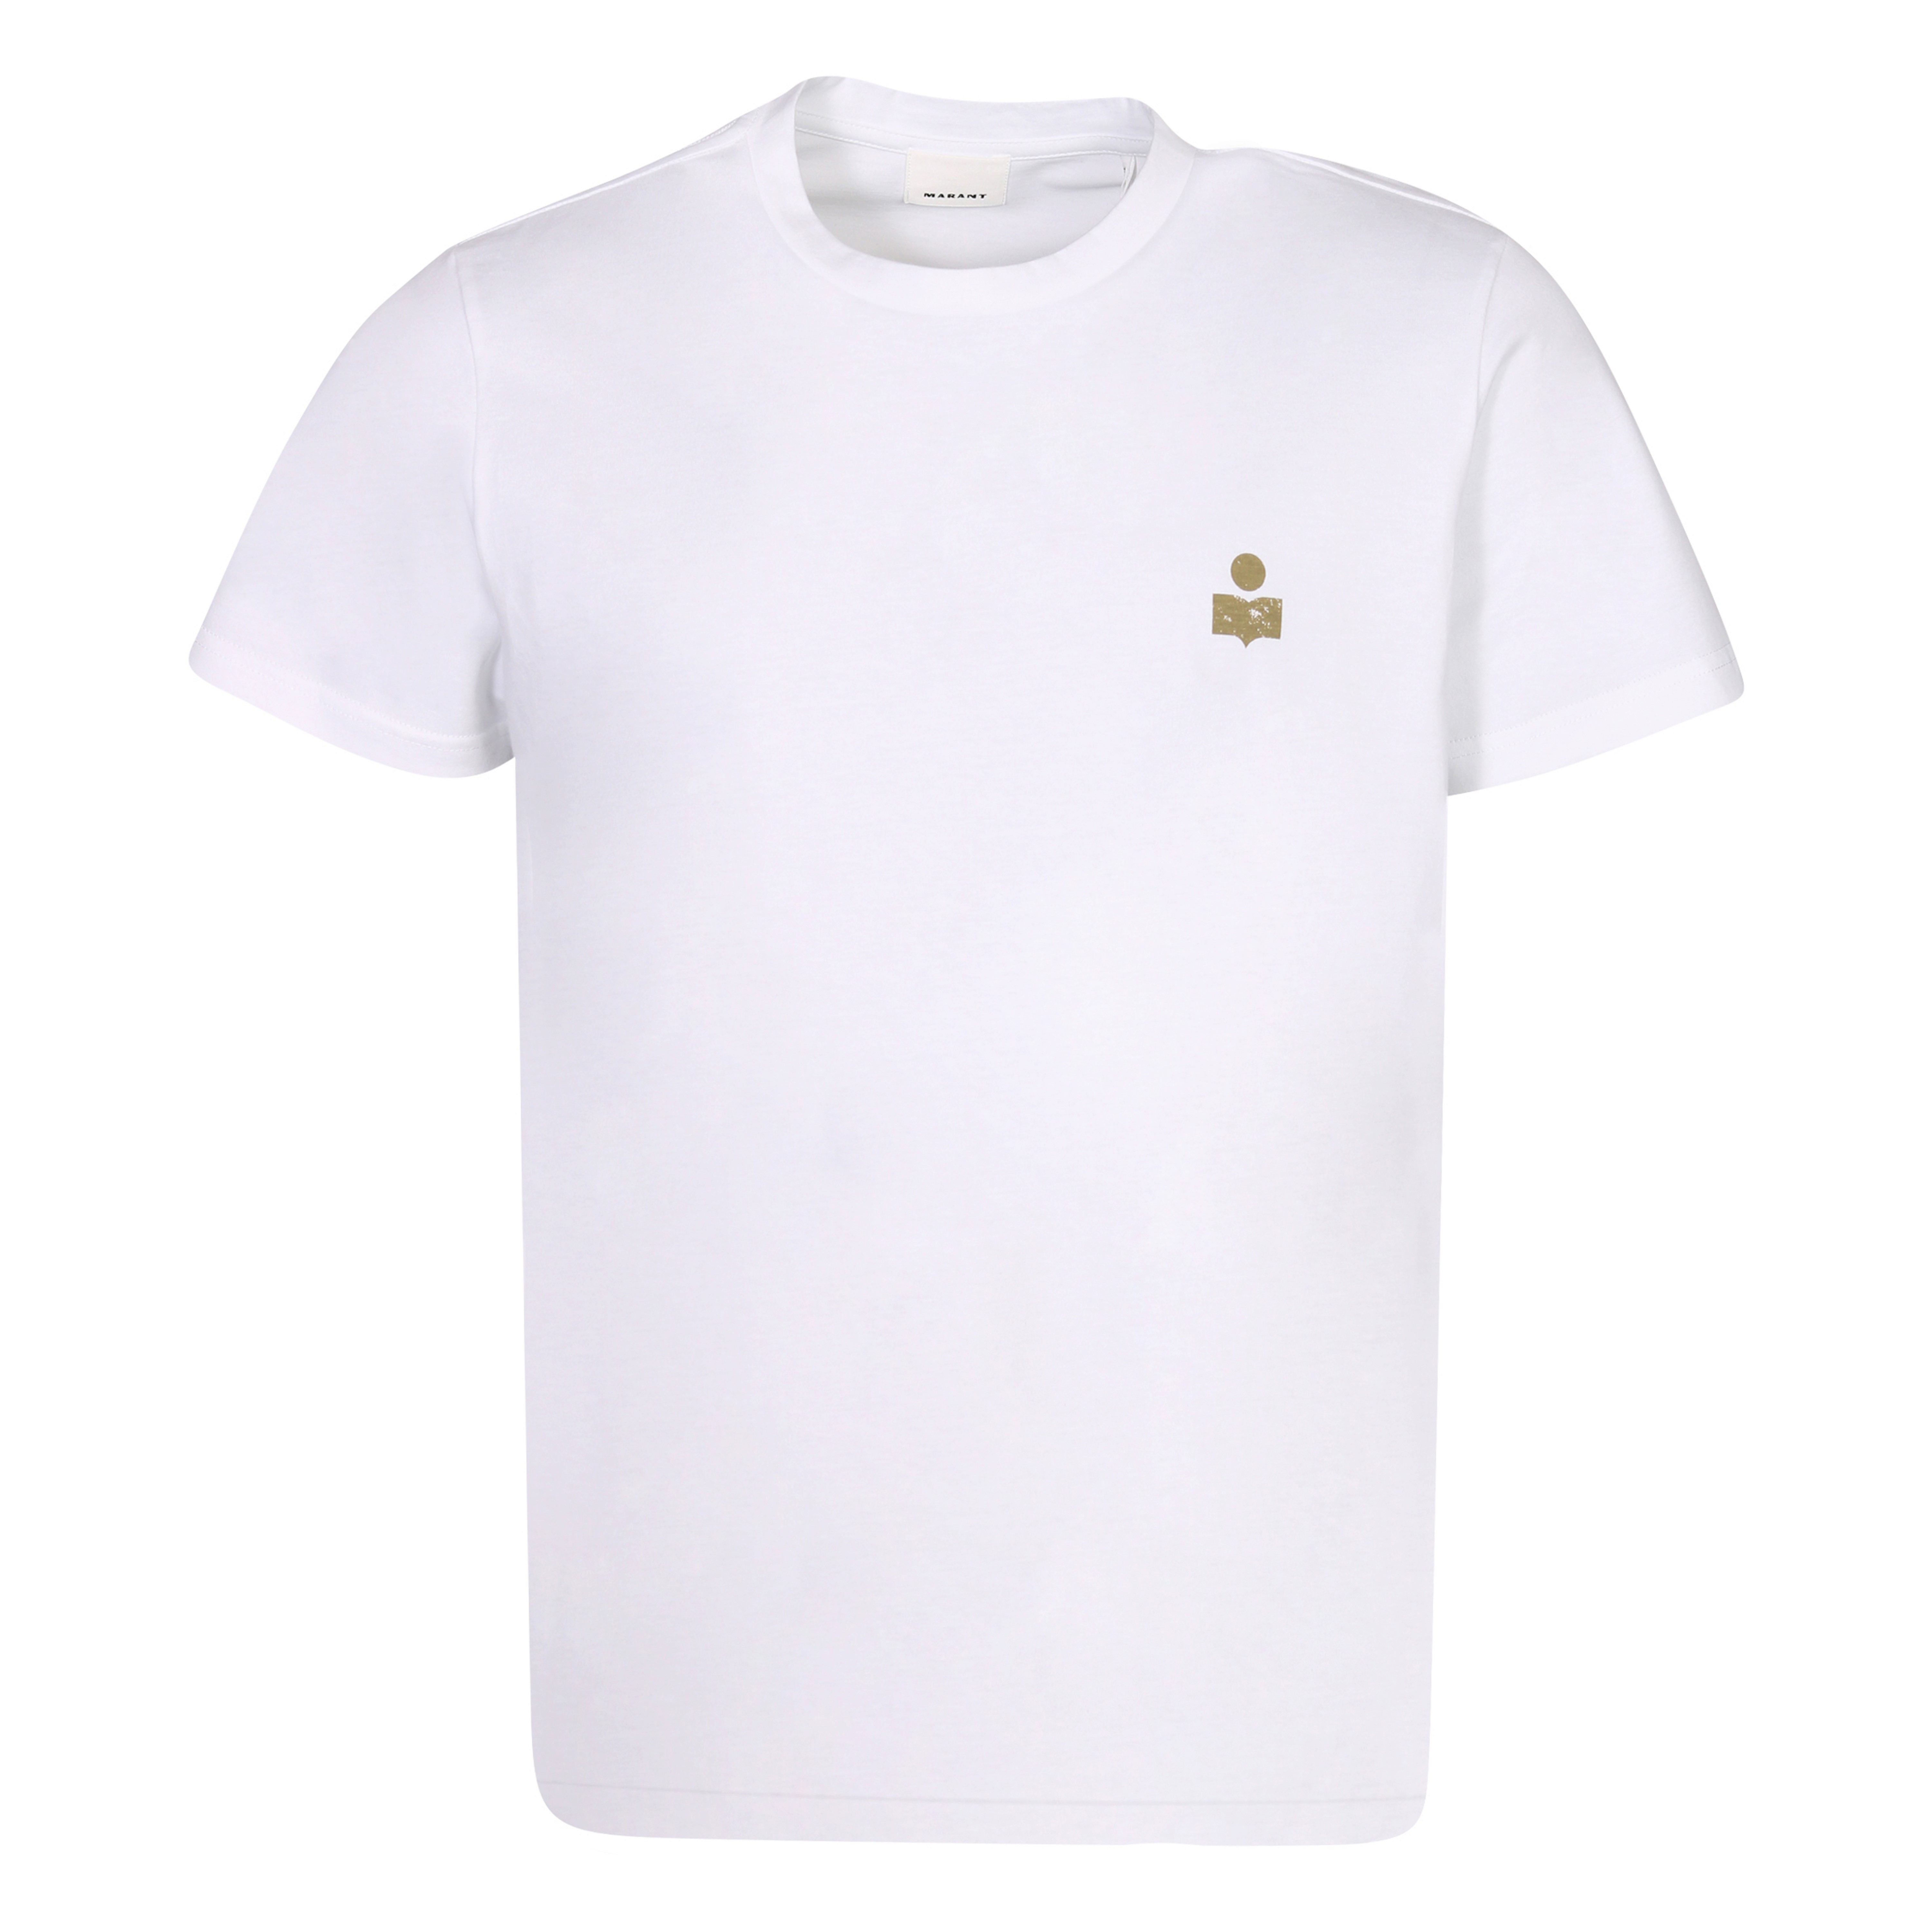 Isabel Marant Zafferh T-Shirt in White/Khaki M